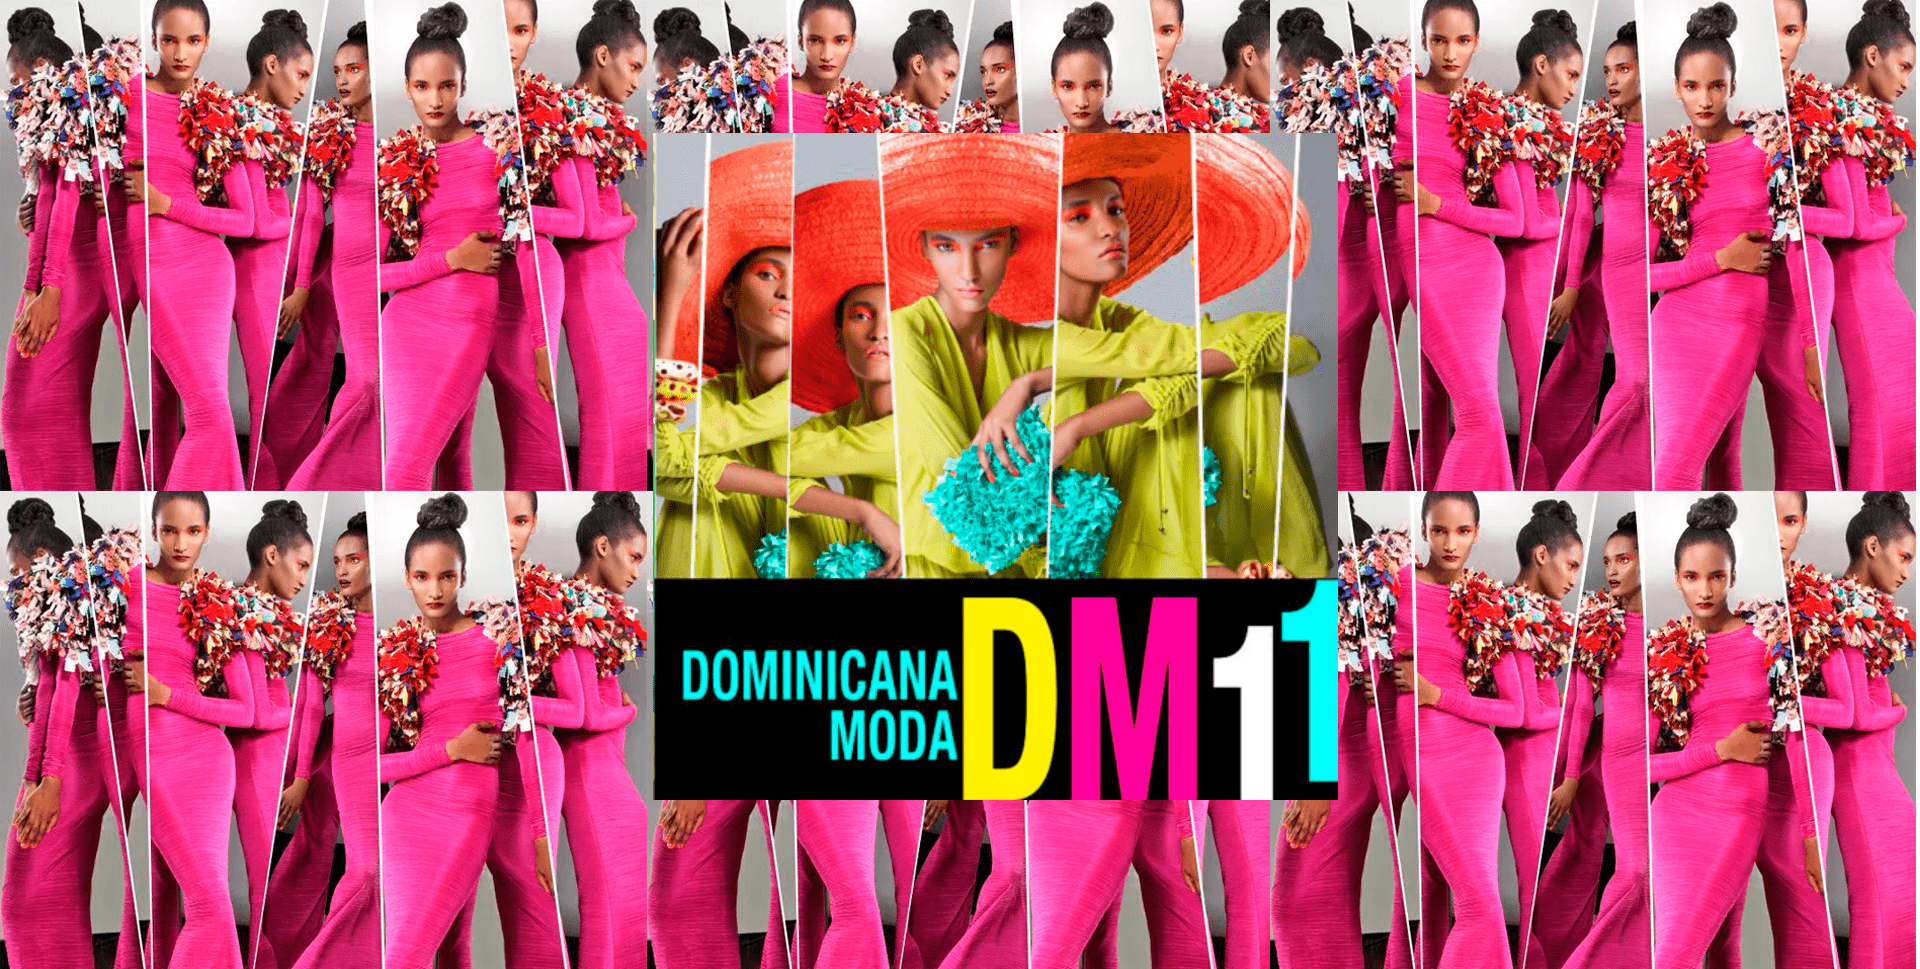 Dominicana Moda - BrandMasters